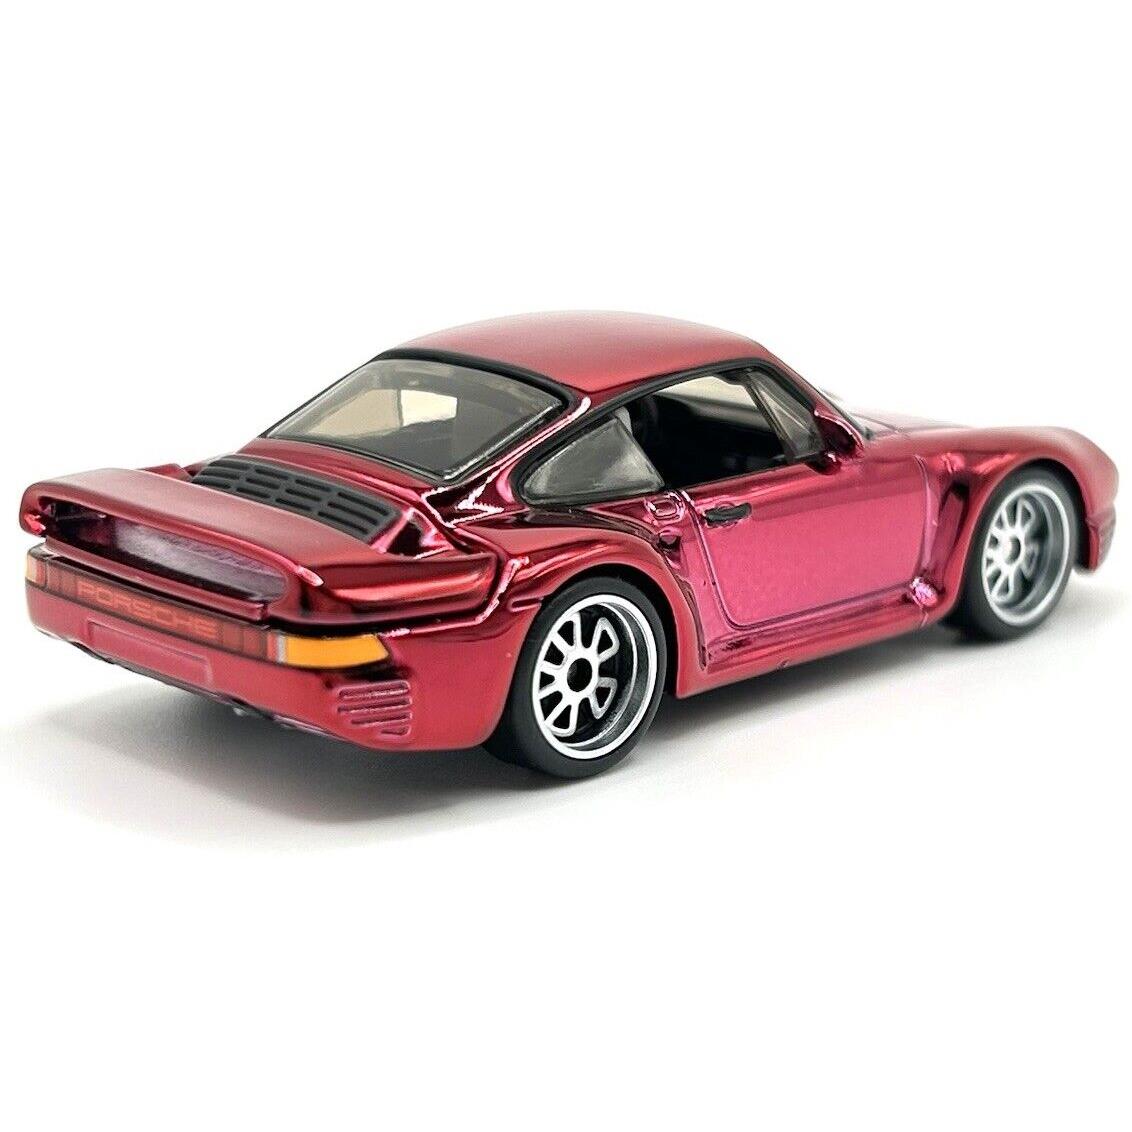 Hot Wheels Rlc Porsche 959 Loose - Red